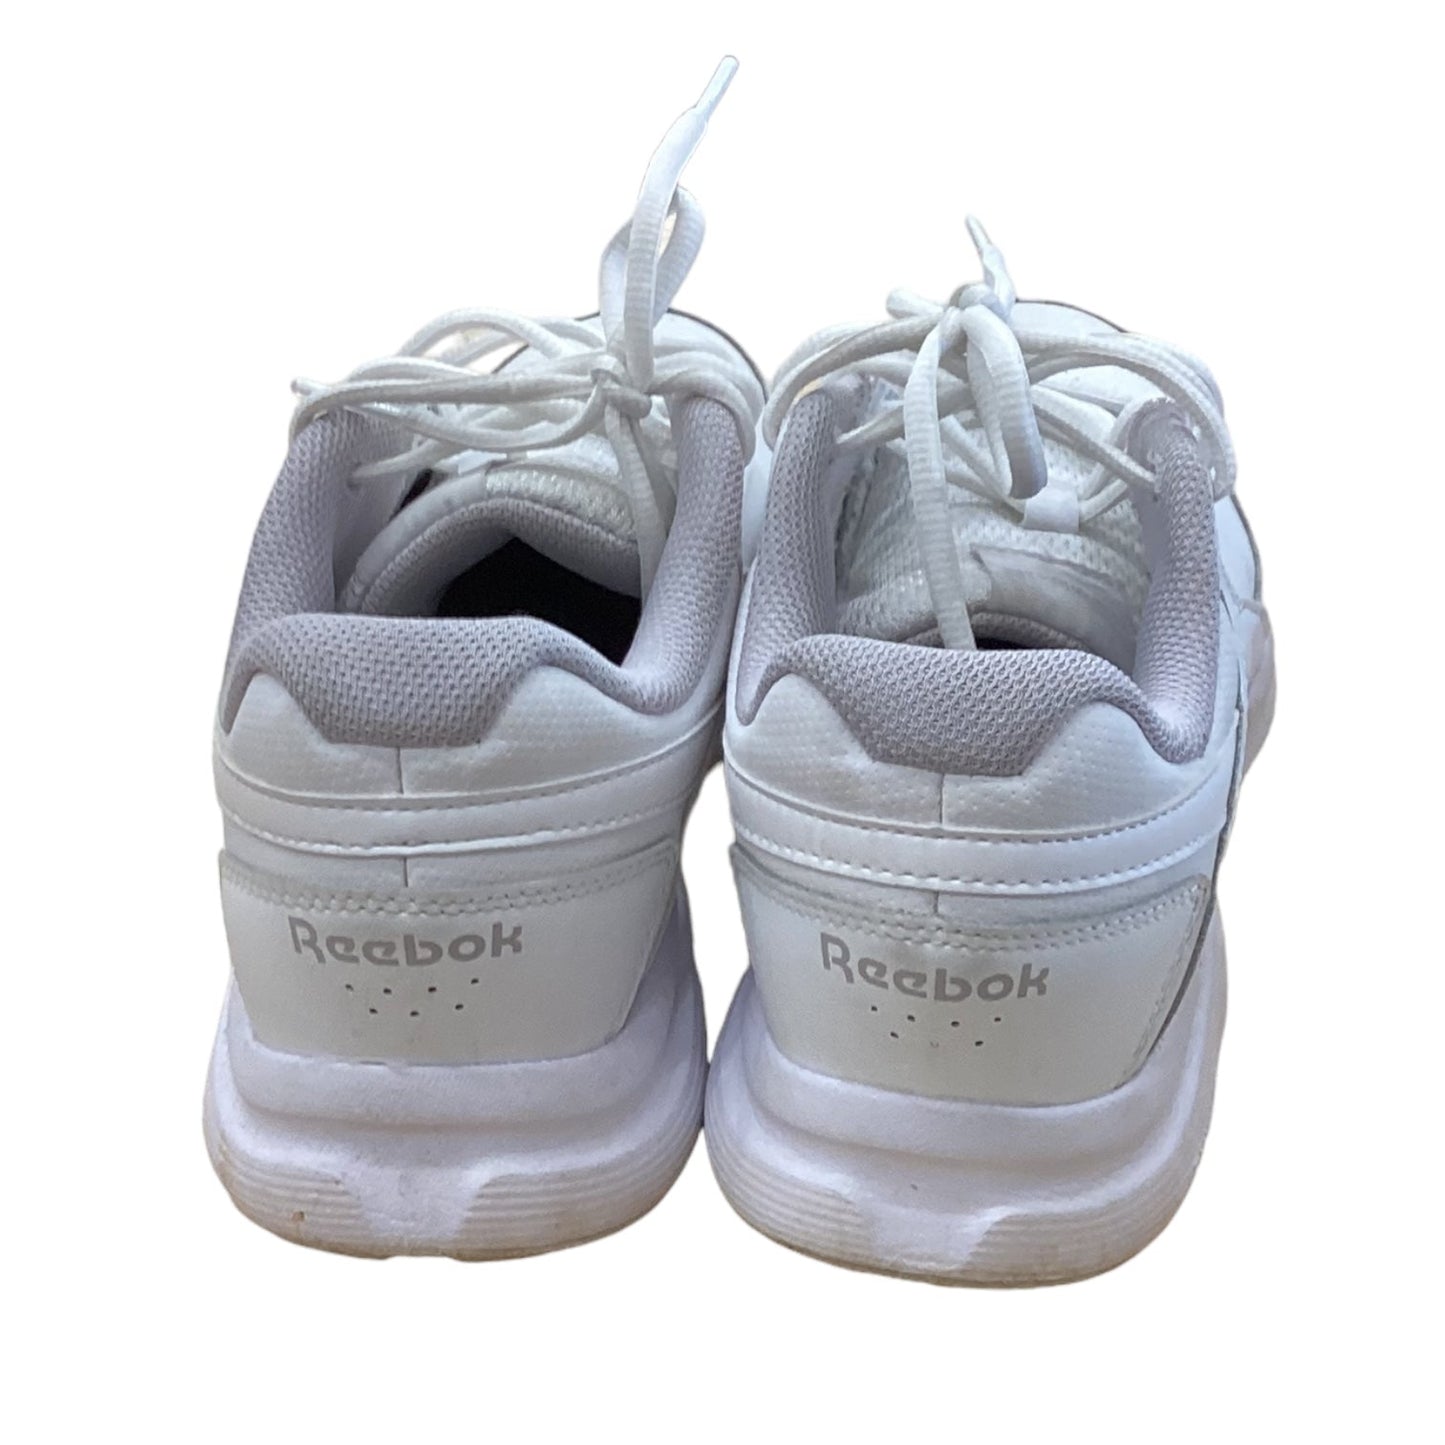 White Shoes Athletic Reebok, Size 8.5